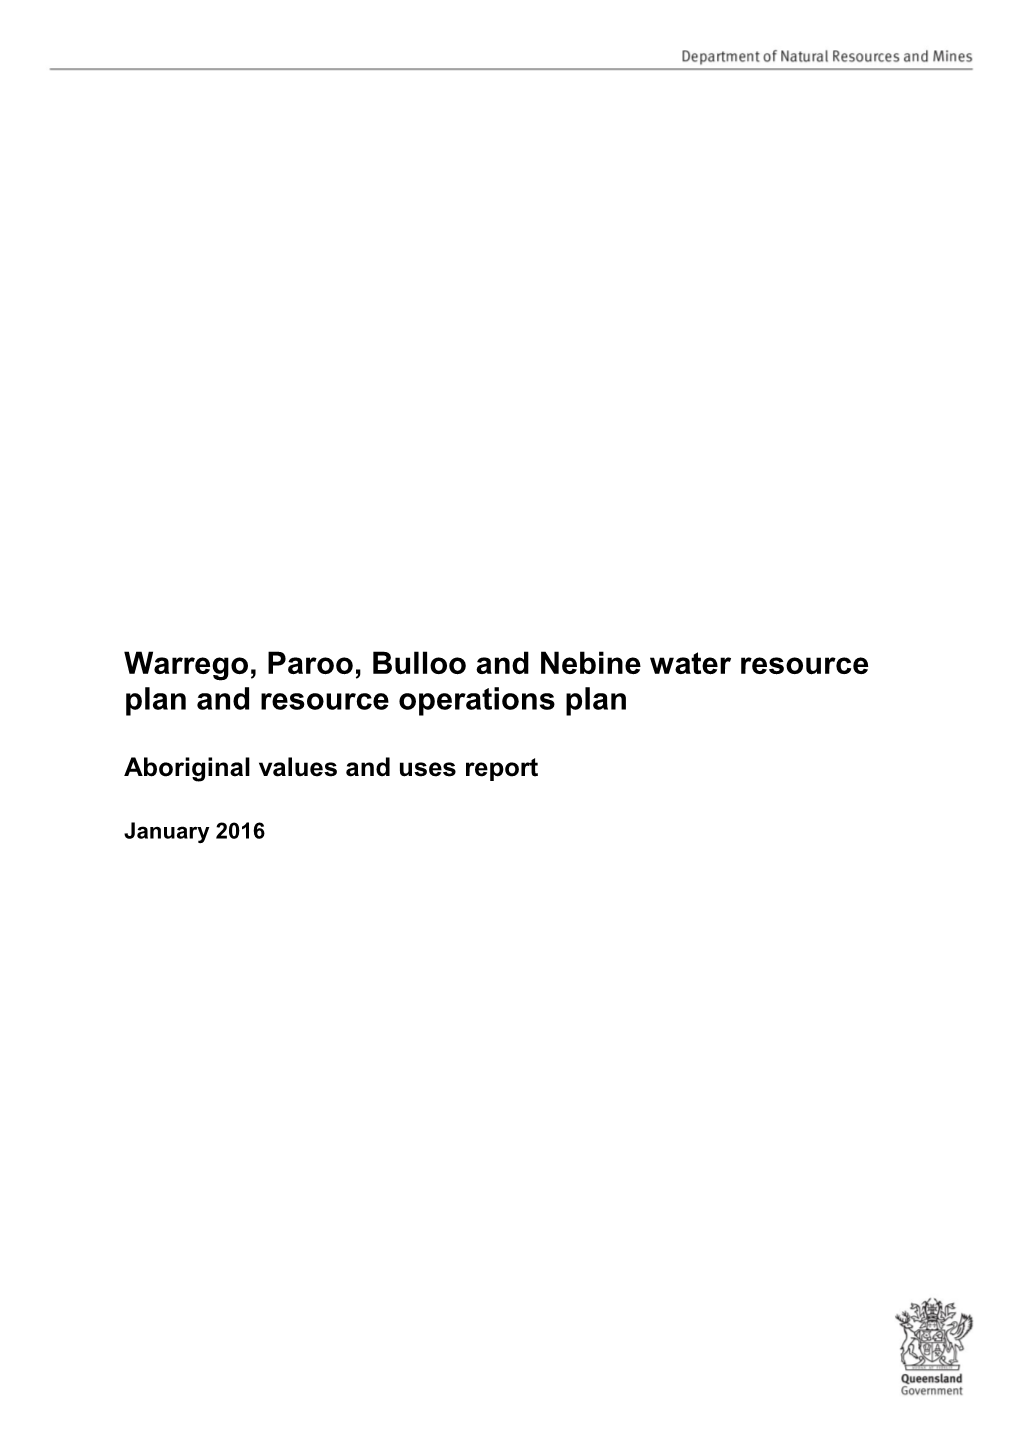 Warrego, Paroo, Bulloo and Nebine Water Resource Plan and Resource Operations Plan